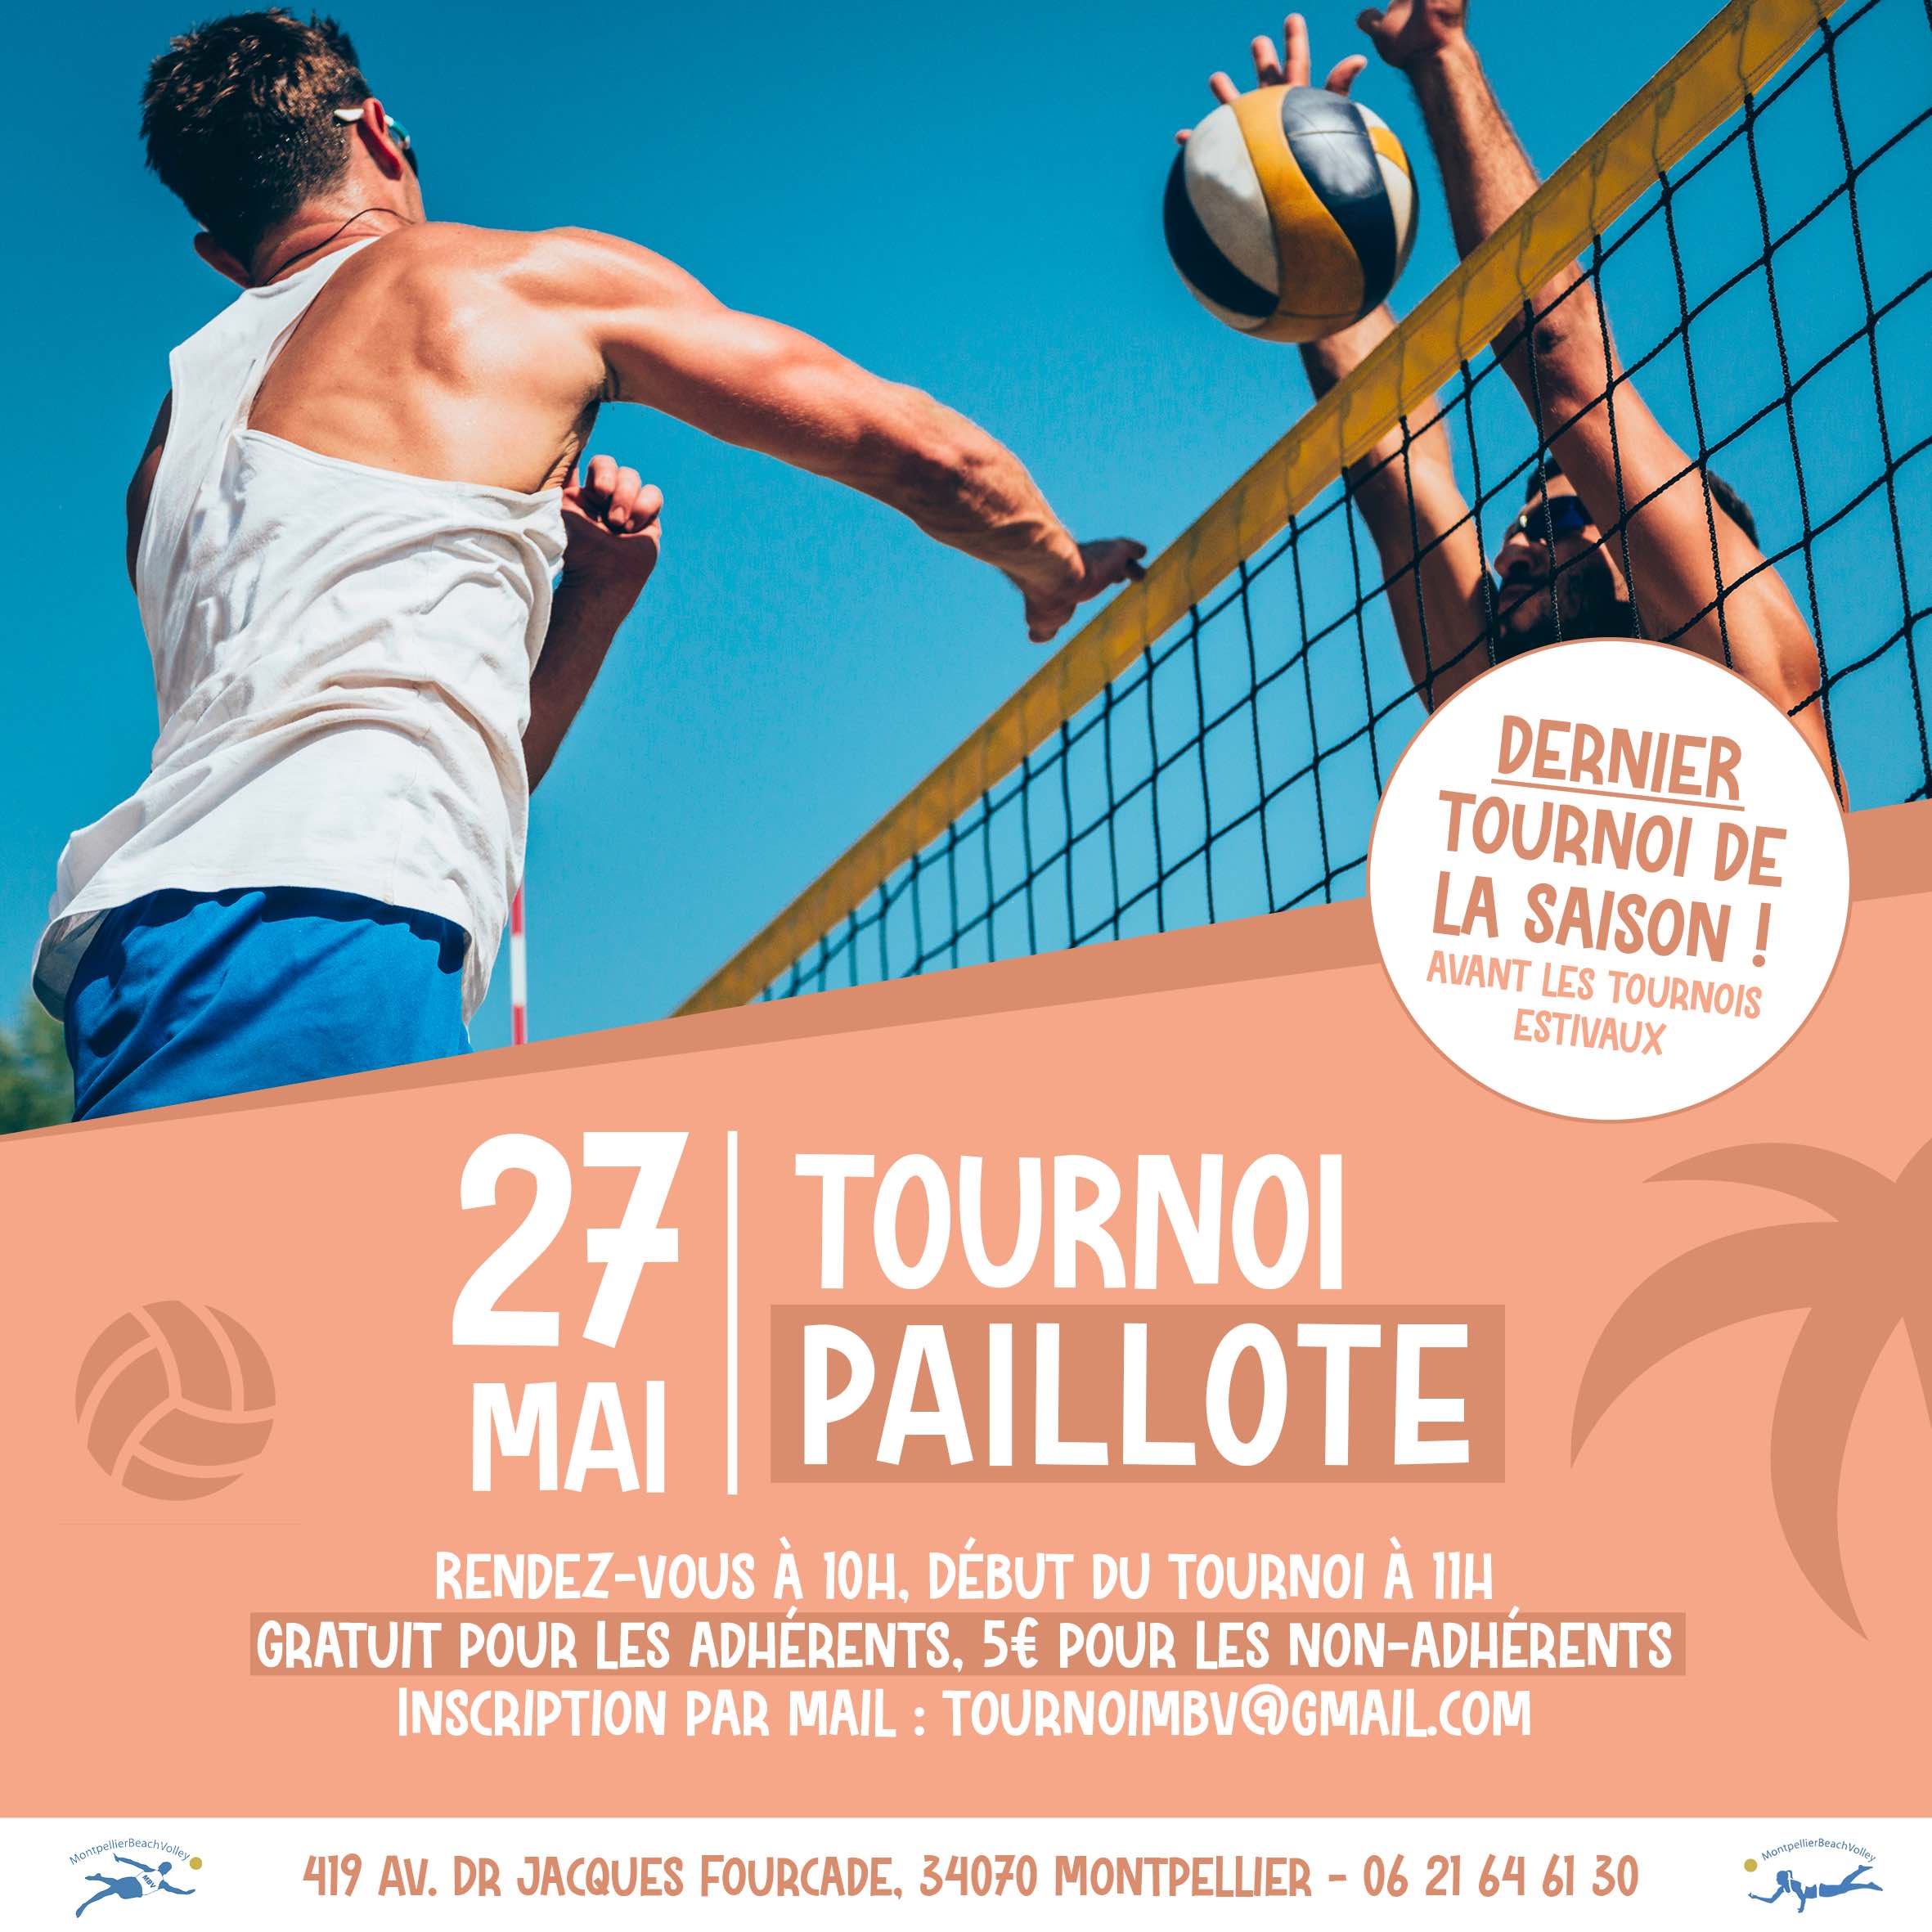 You are currently viewing Samedi 27 Mai dernier Tournoi Paillote avant la période estivale !